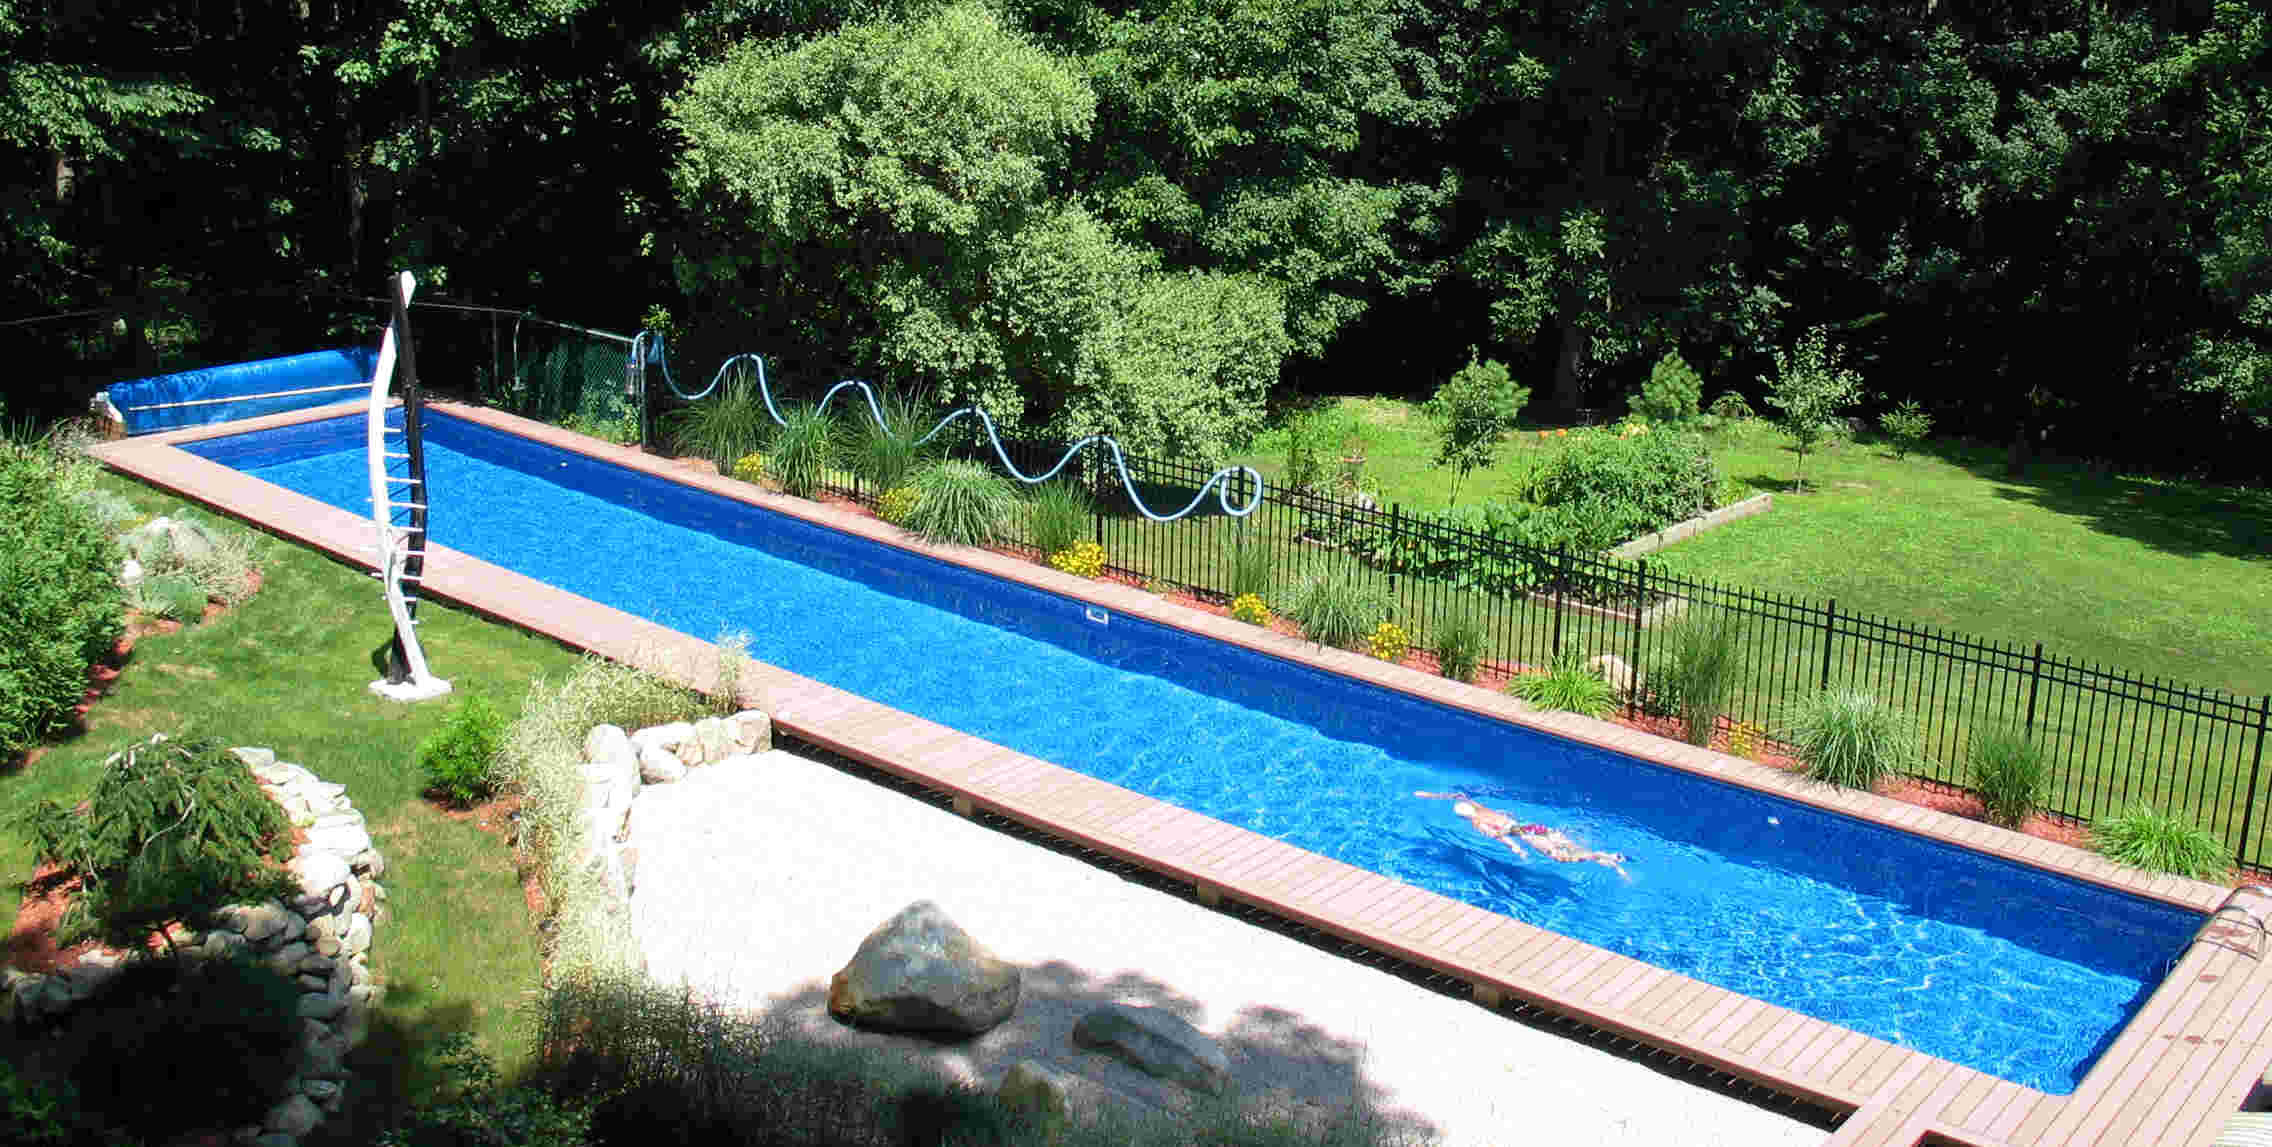 Best ideas about DIY Lap Pool
. Save or Pin DIY Inground Swimming Pools Now.